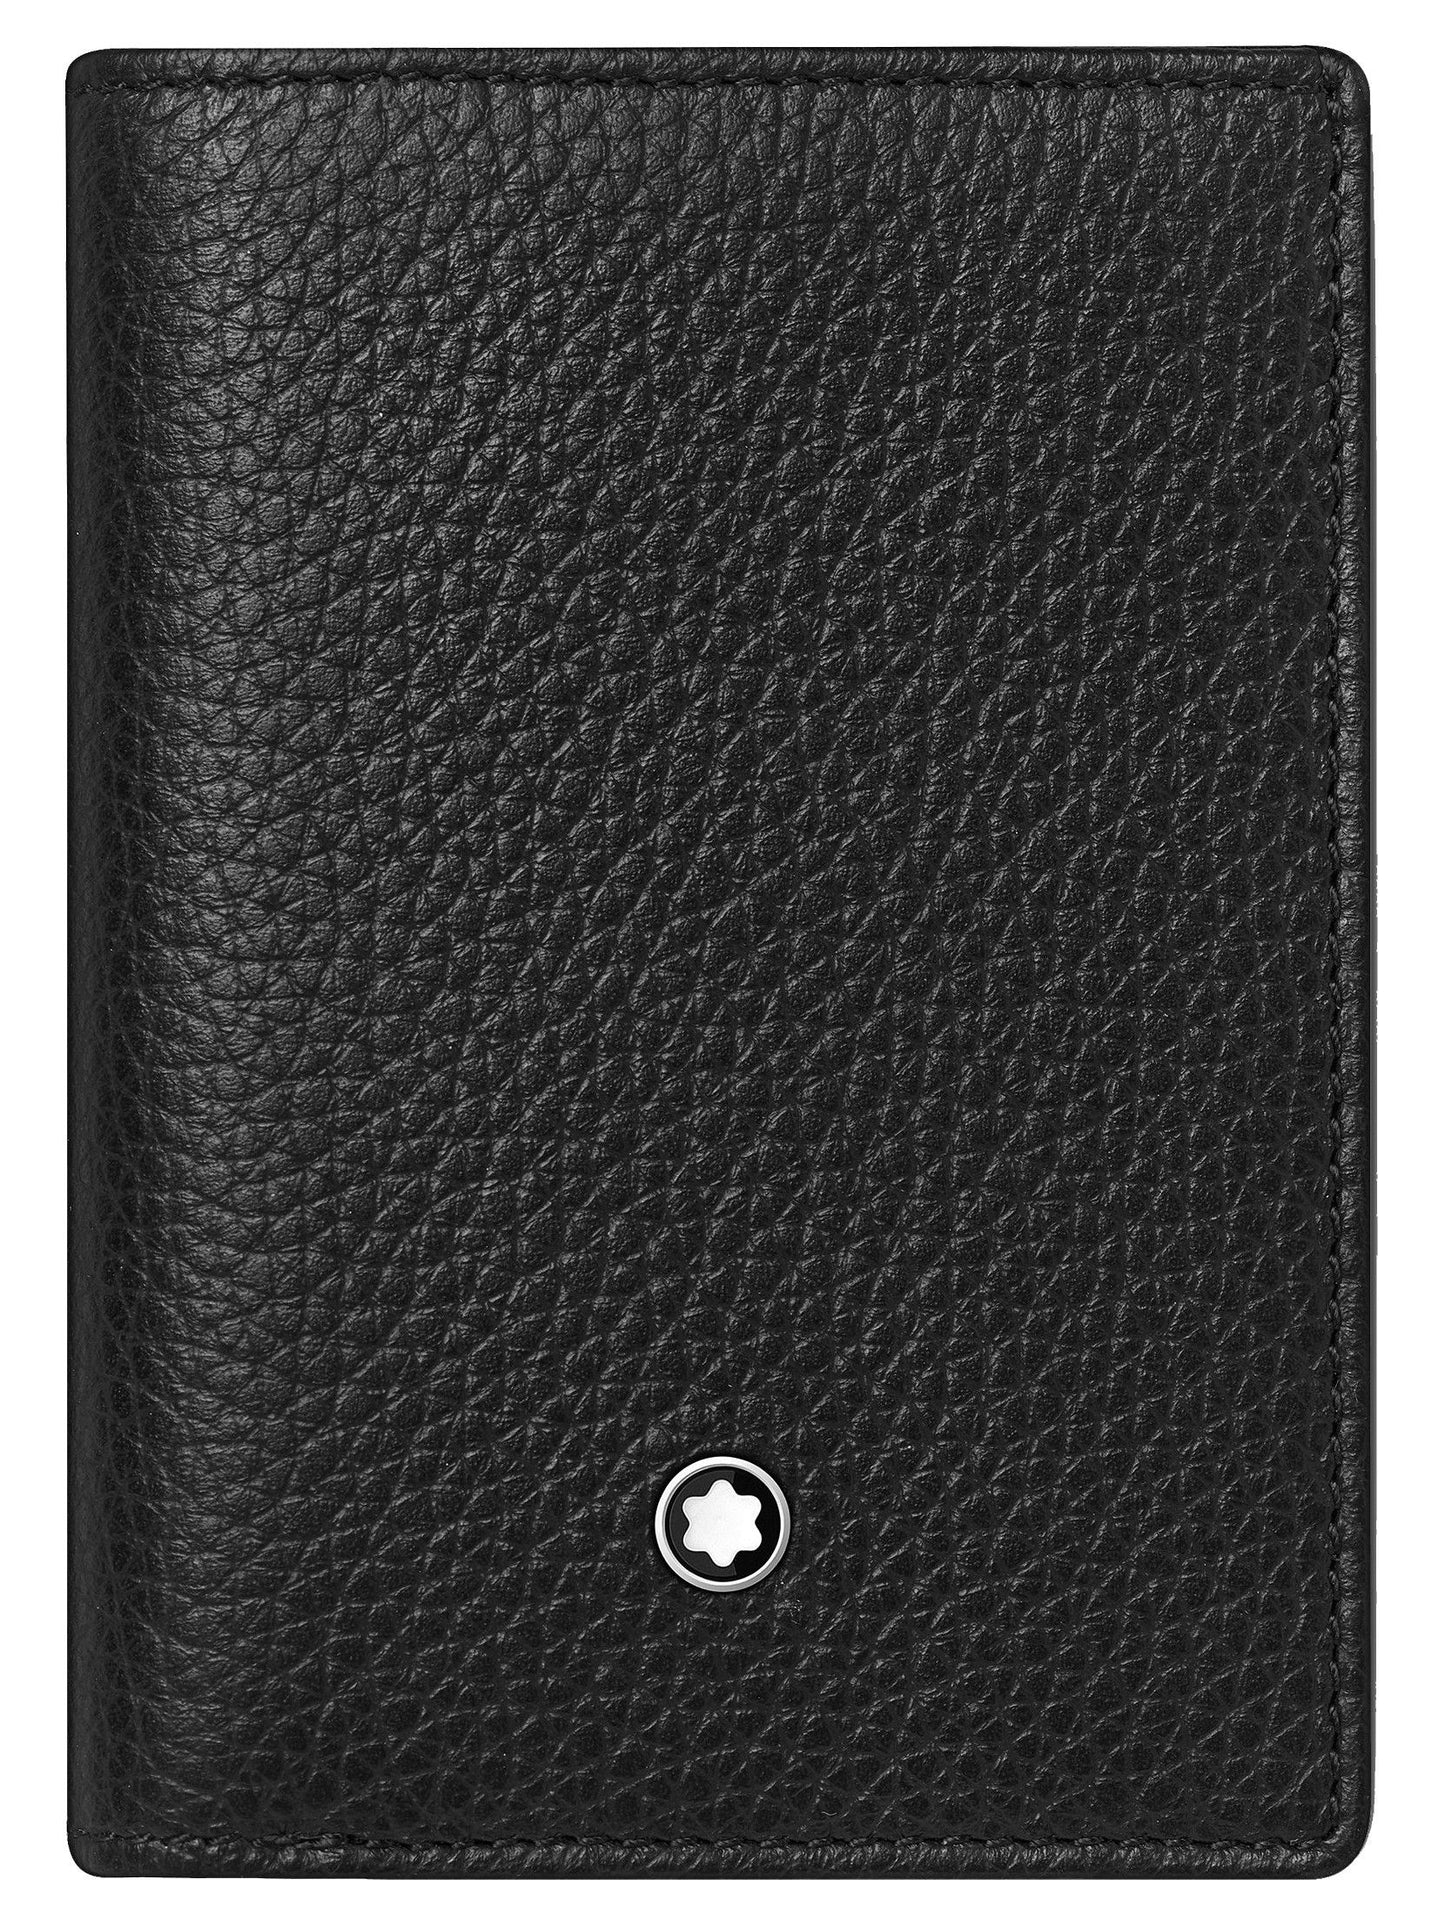 Montblanc Meisterstuck Black Soft Grain Compact 126259 Men's Wallet